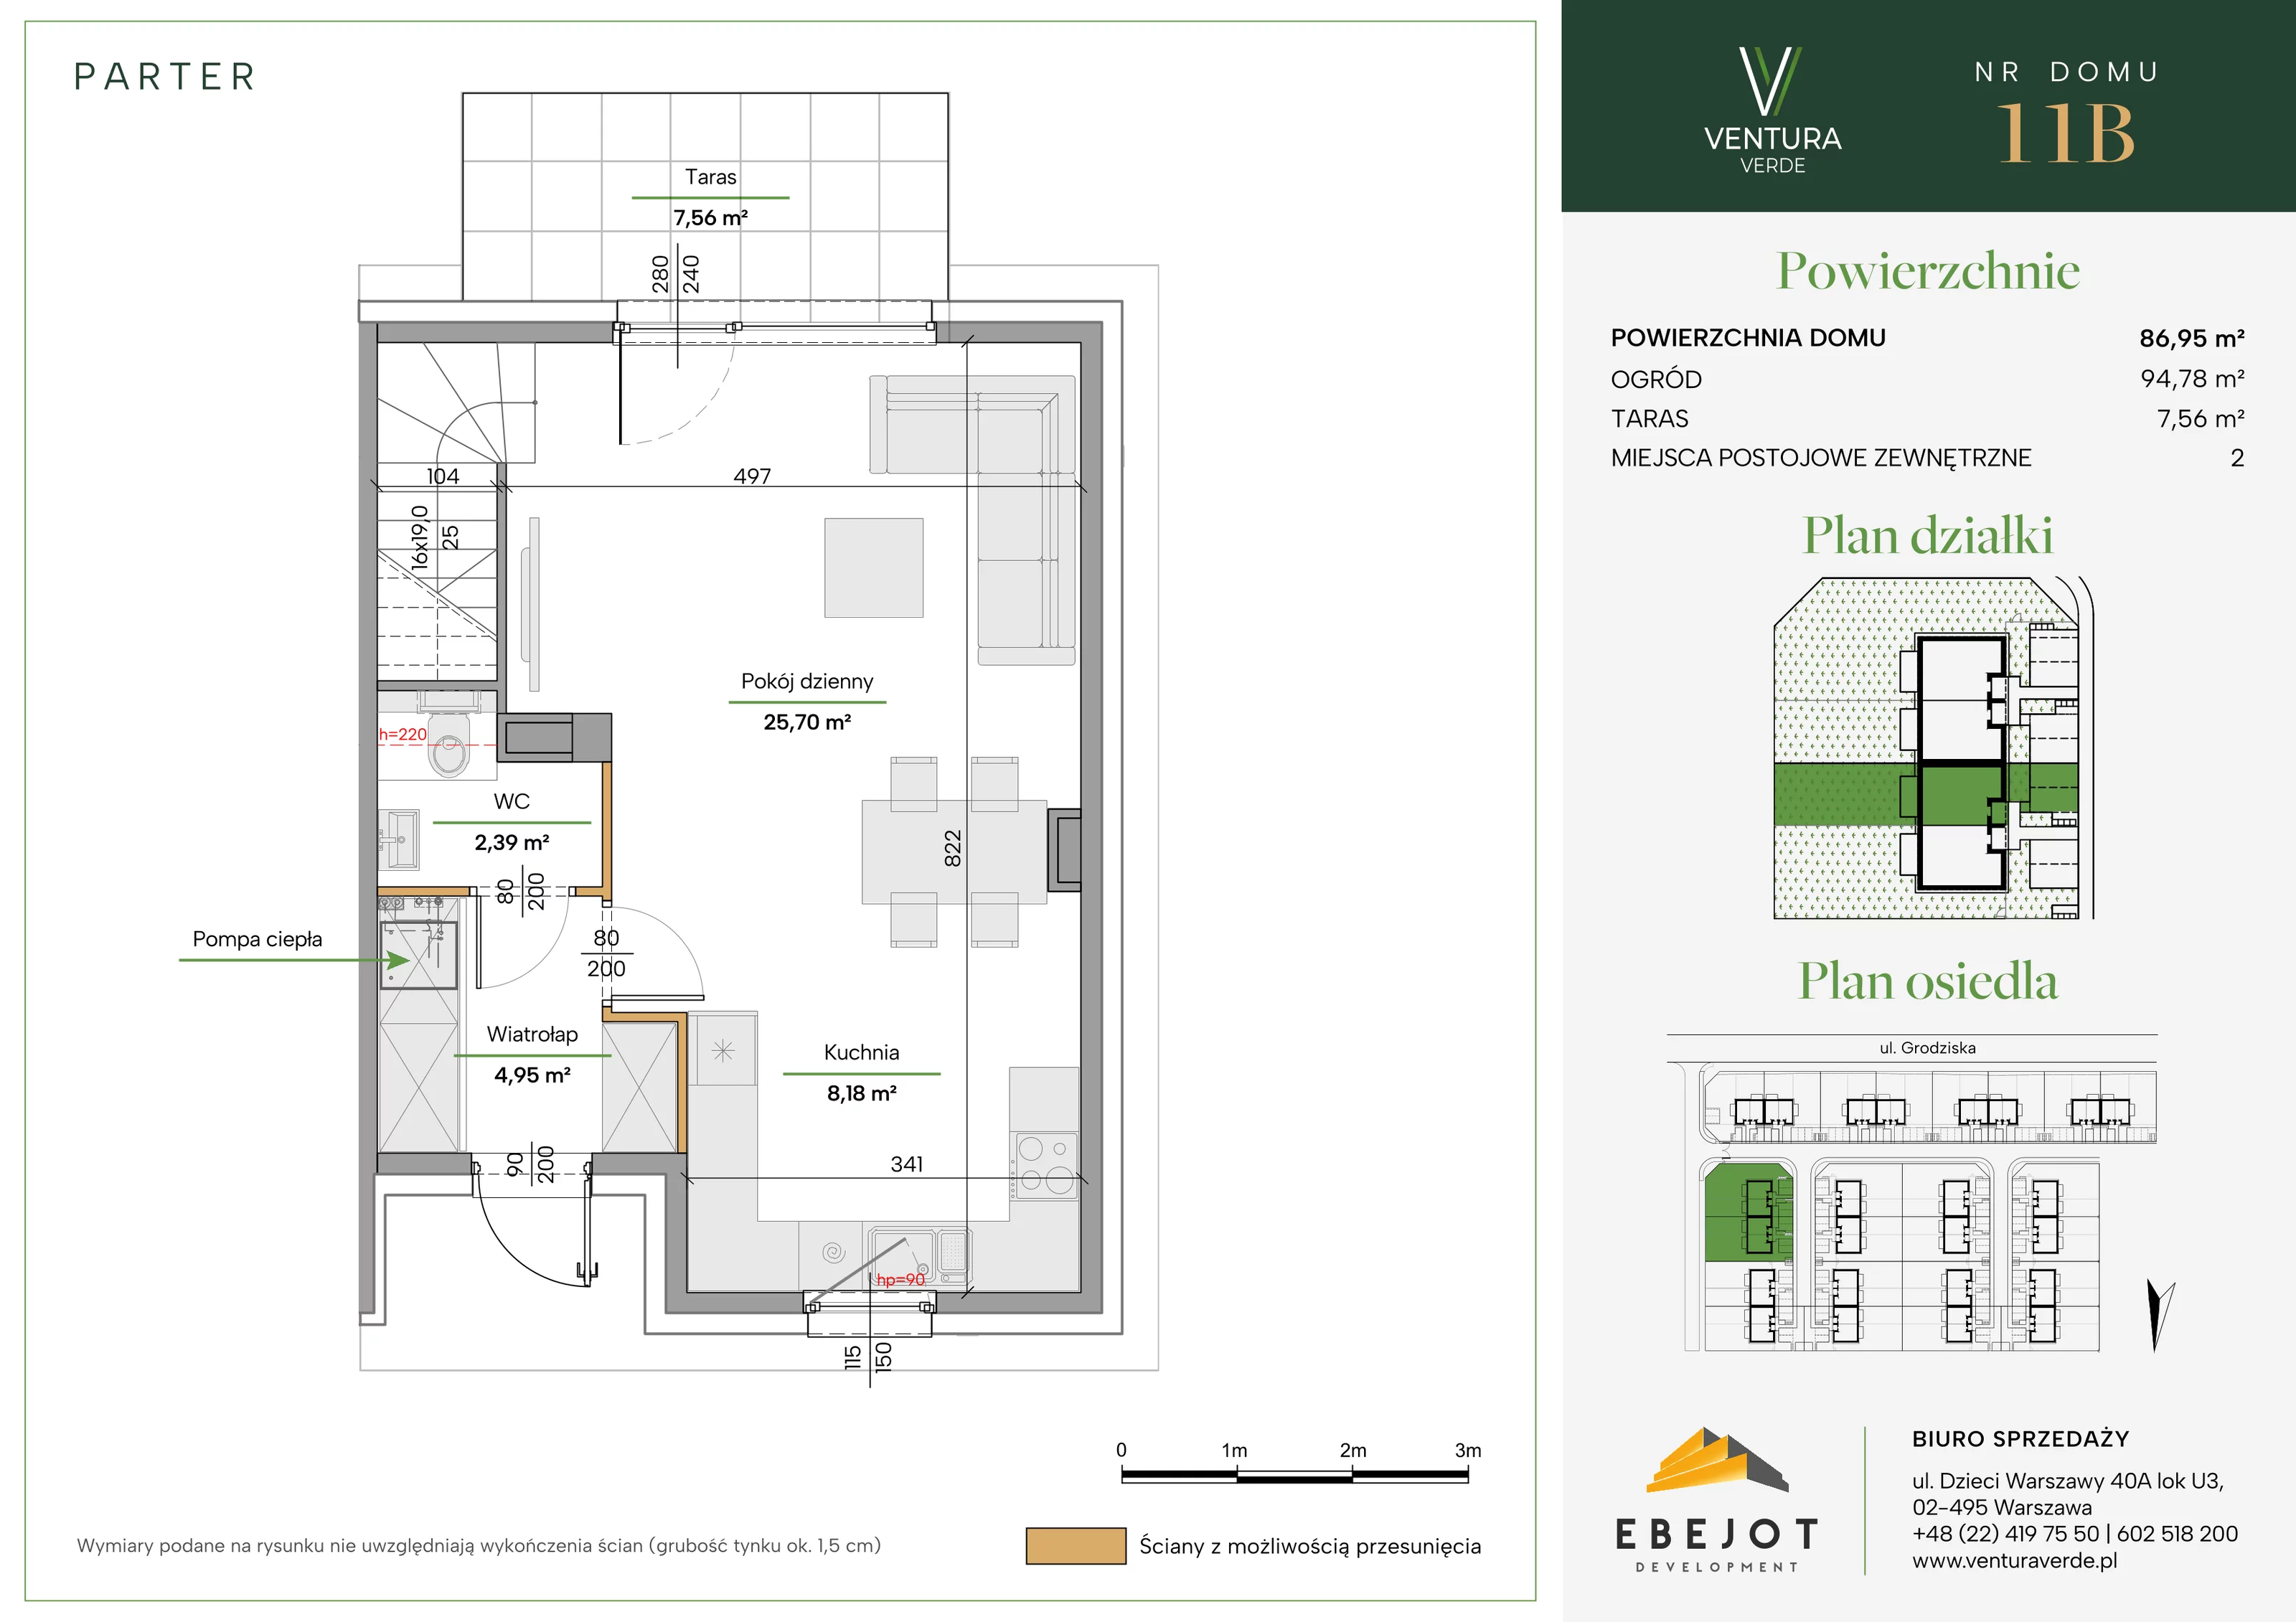 Dom 86,95 m², oferta nr 11B, Ventura Verde II, Stara Wieś, ul. Grodziska